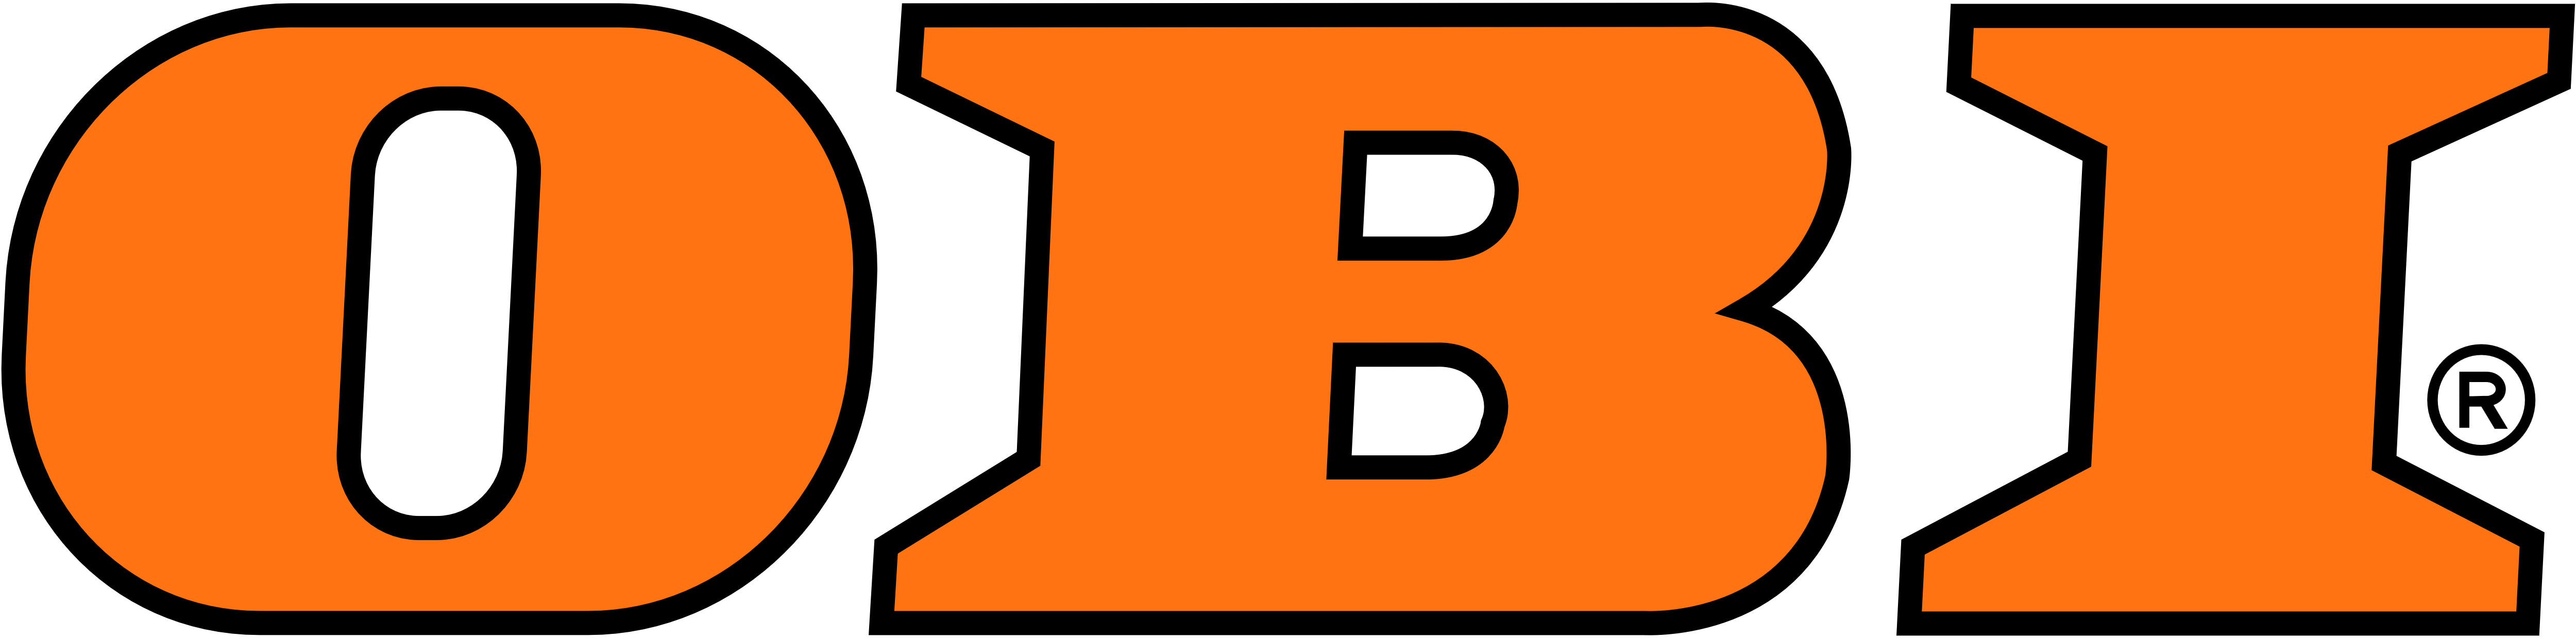 obi logo logotype all logos emblems brands pictures gallery